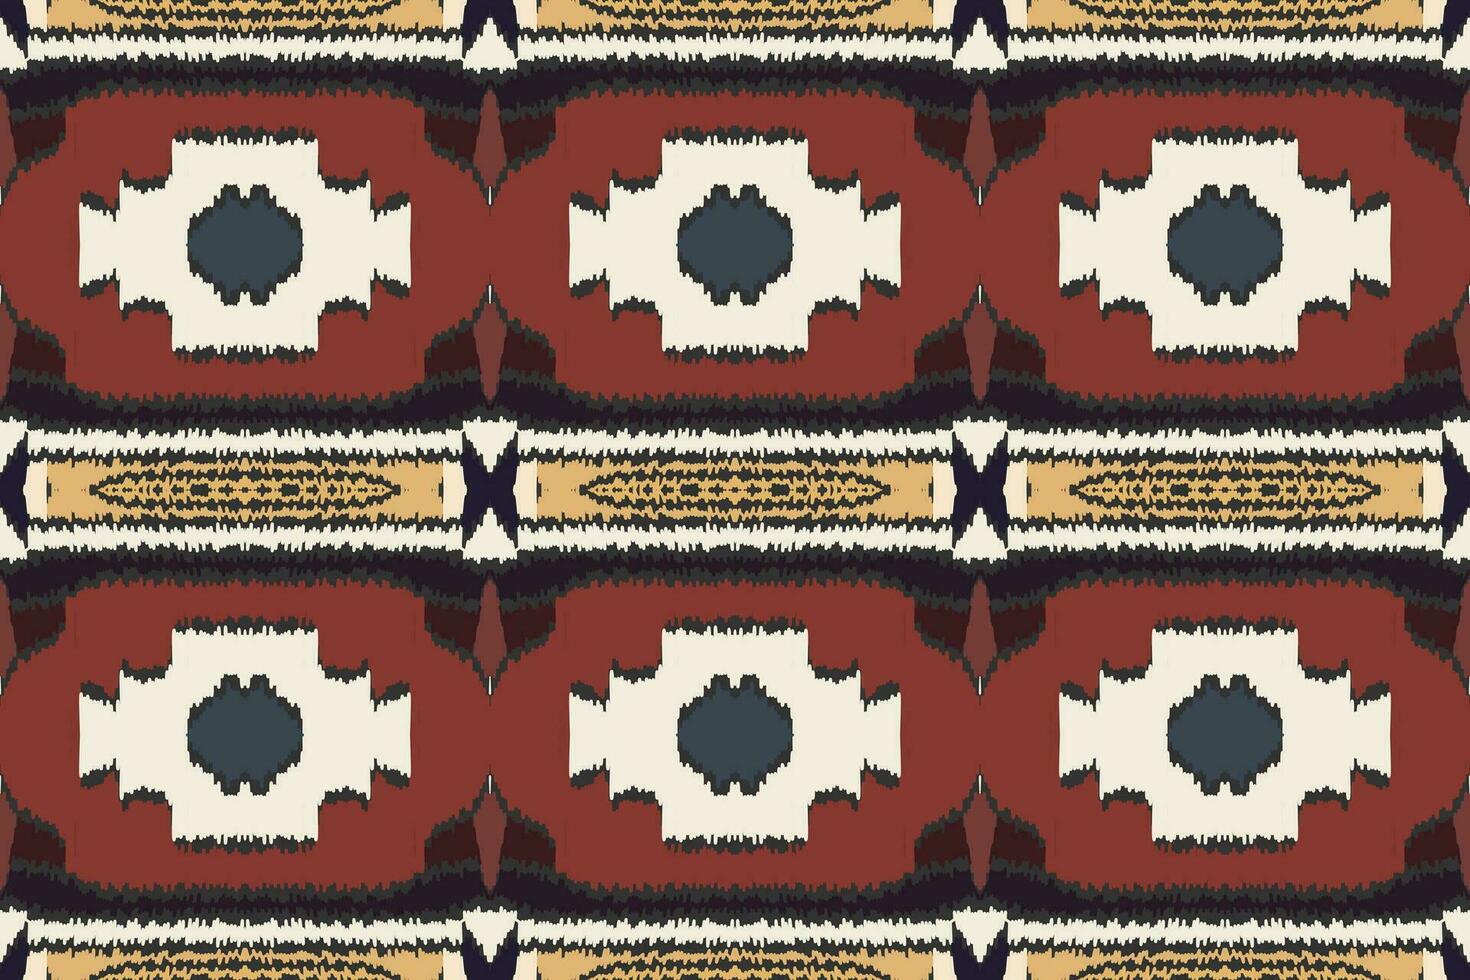 motivo ikat sin costura modelo bordado antecedentes. ikat floral geométrico étnico oriental modelo tradicional. ikat azteca estilo resumen diseño para impresión textura,tela,sari,sari,alfombra. vector